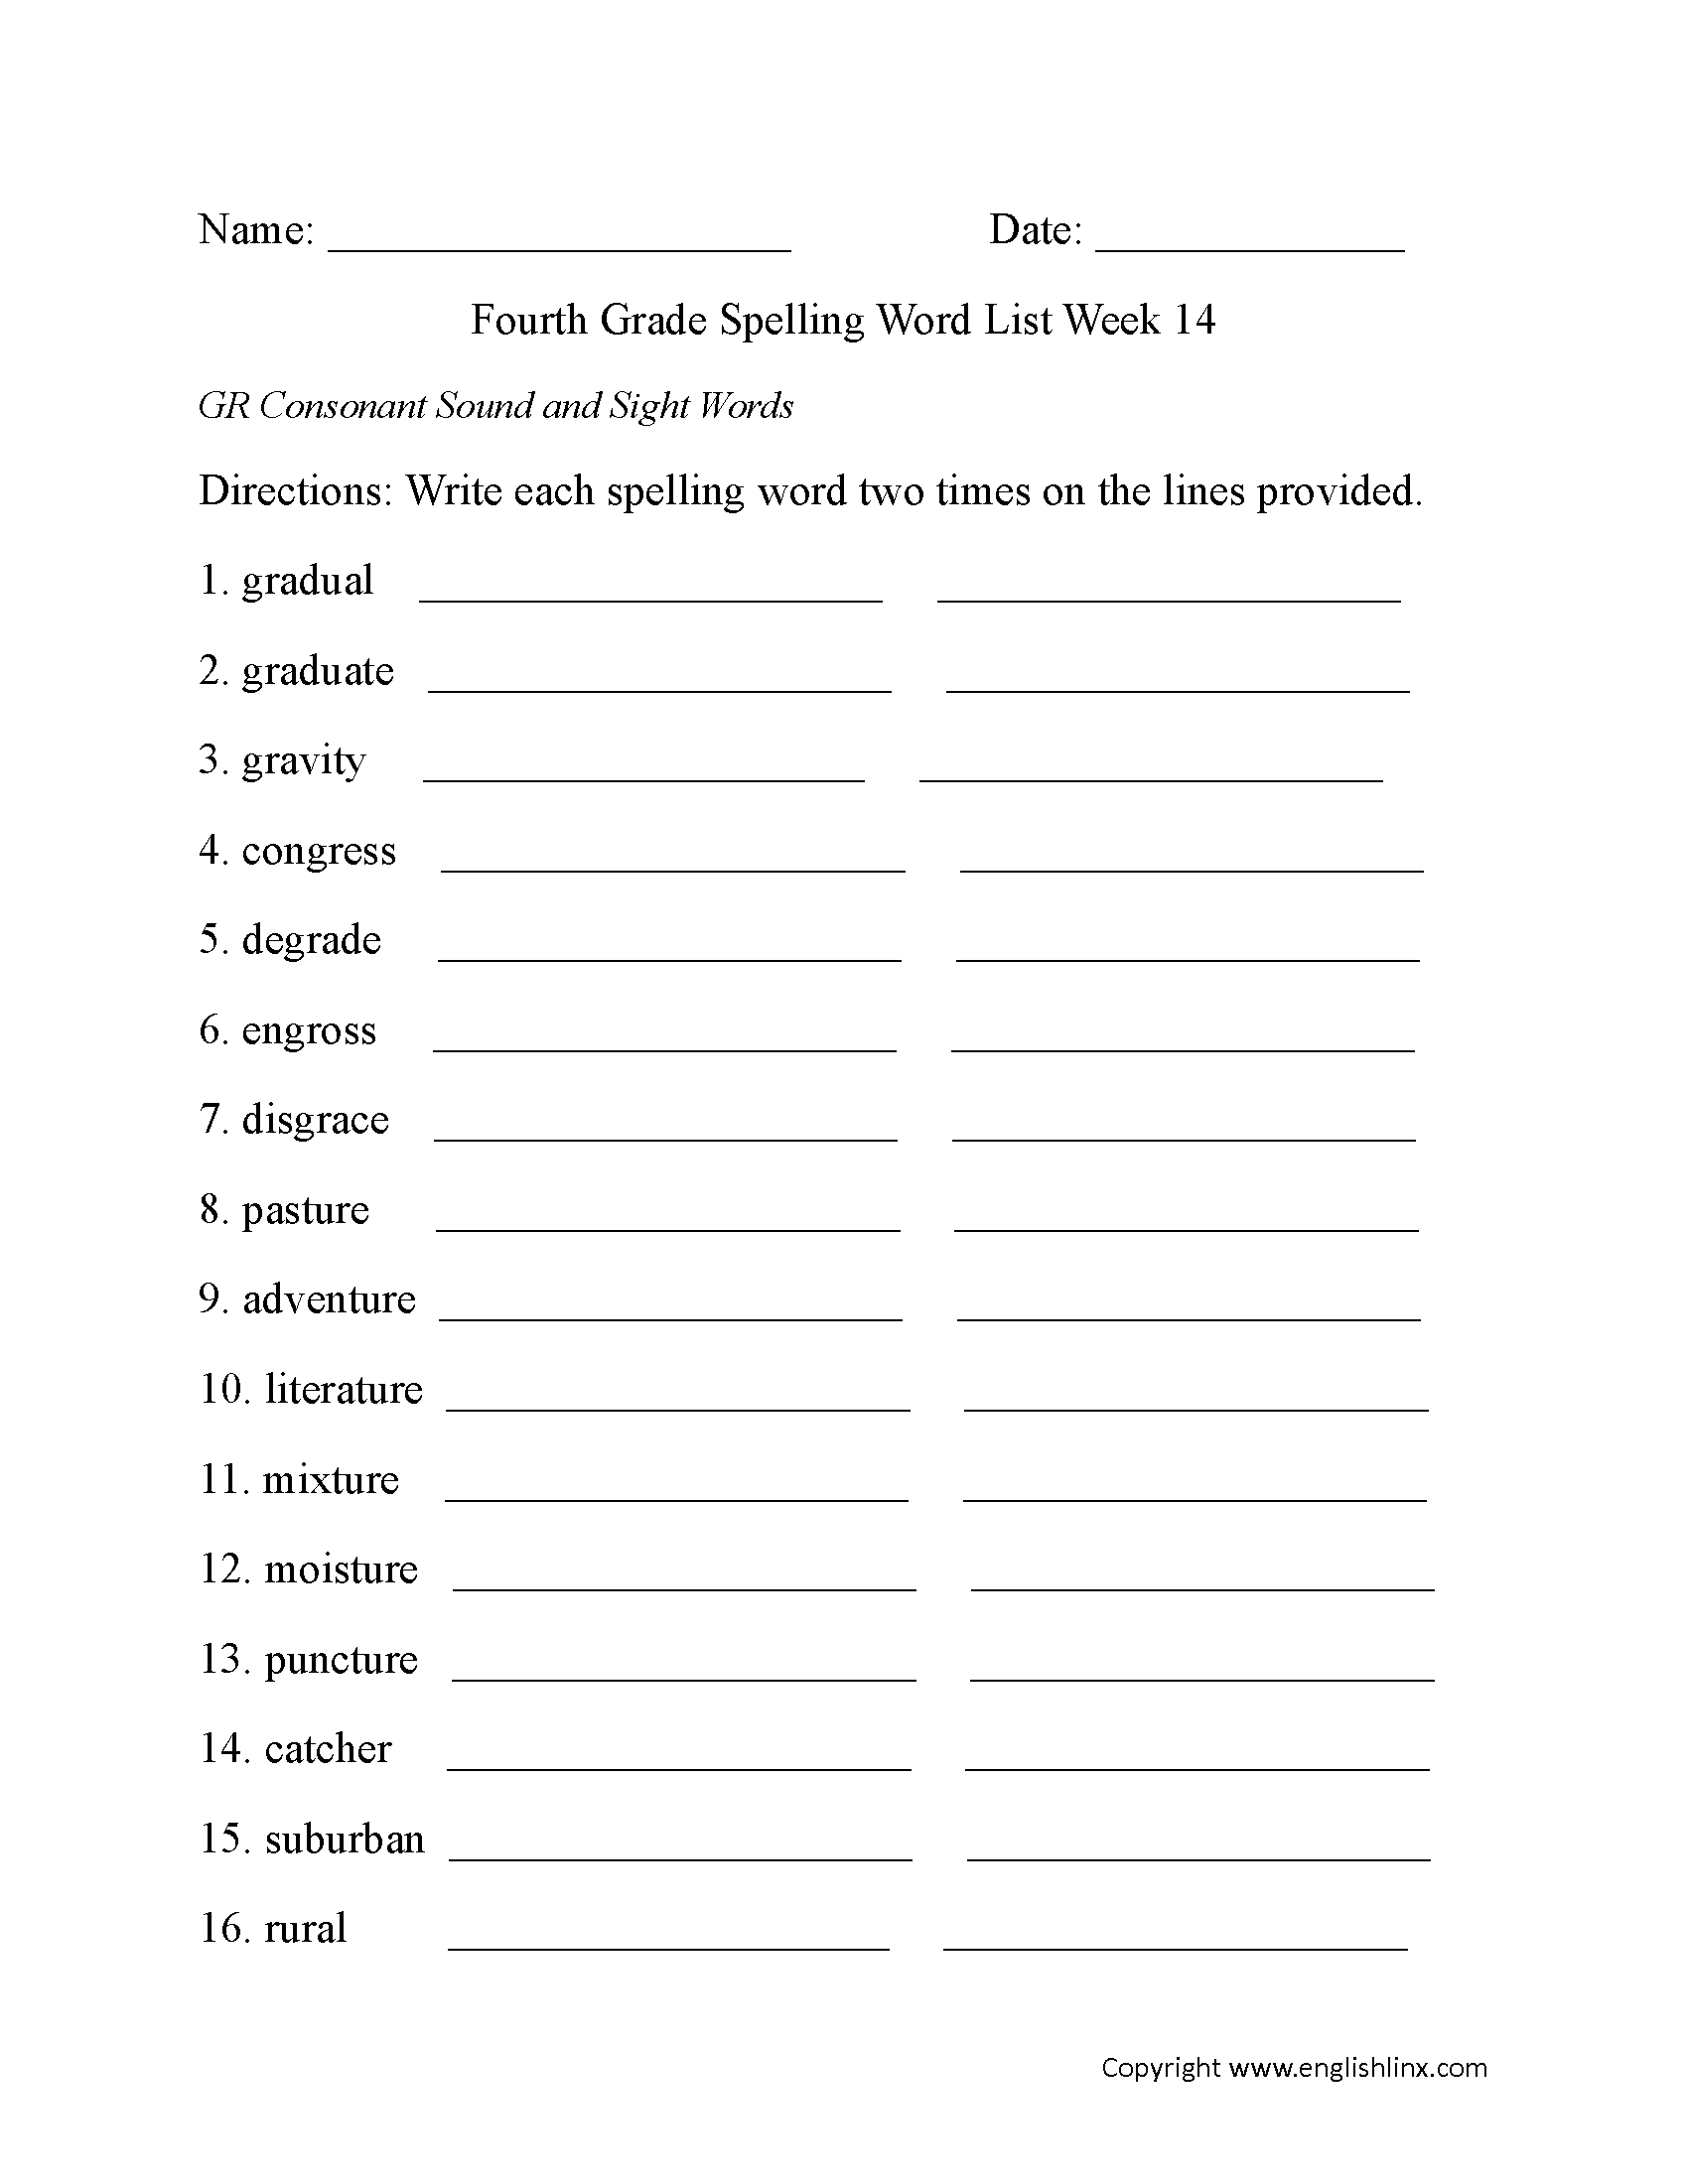 Spelling Worksheets | Fourth Grade Spelling Words Worksheets